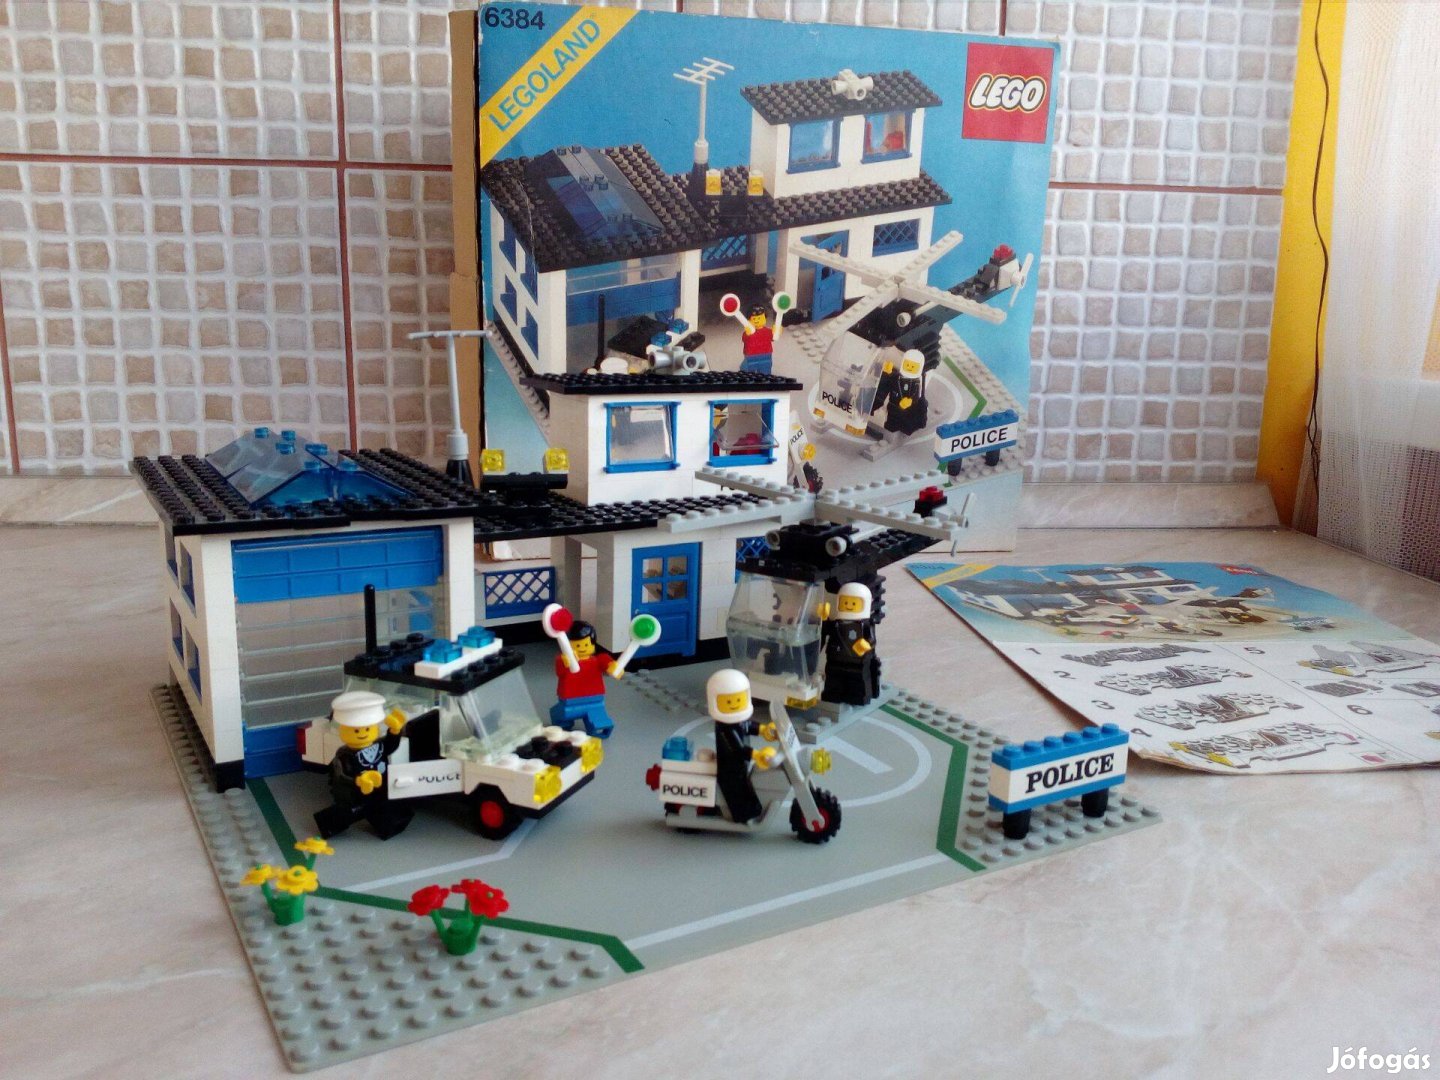 Legoland - Police